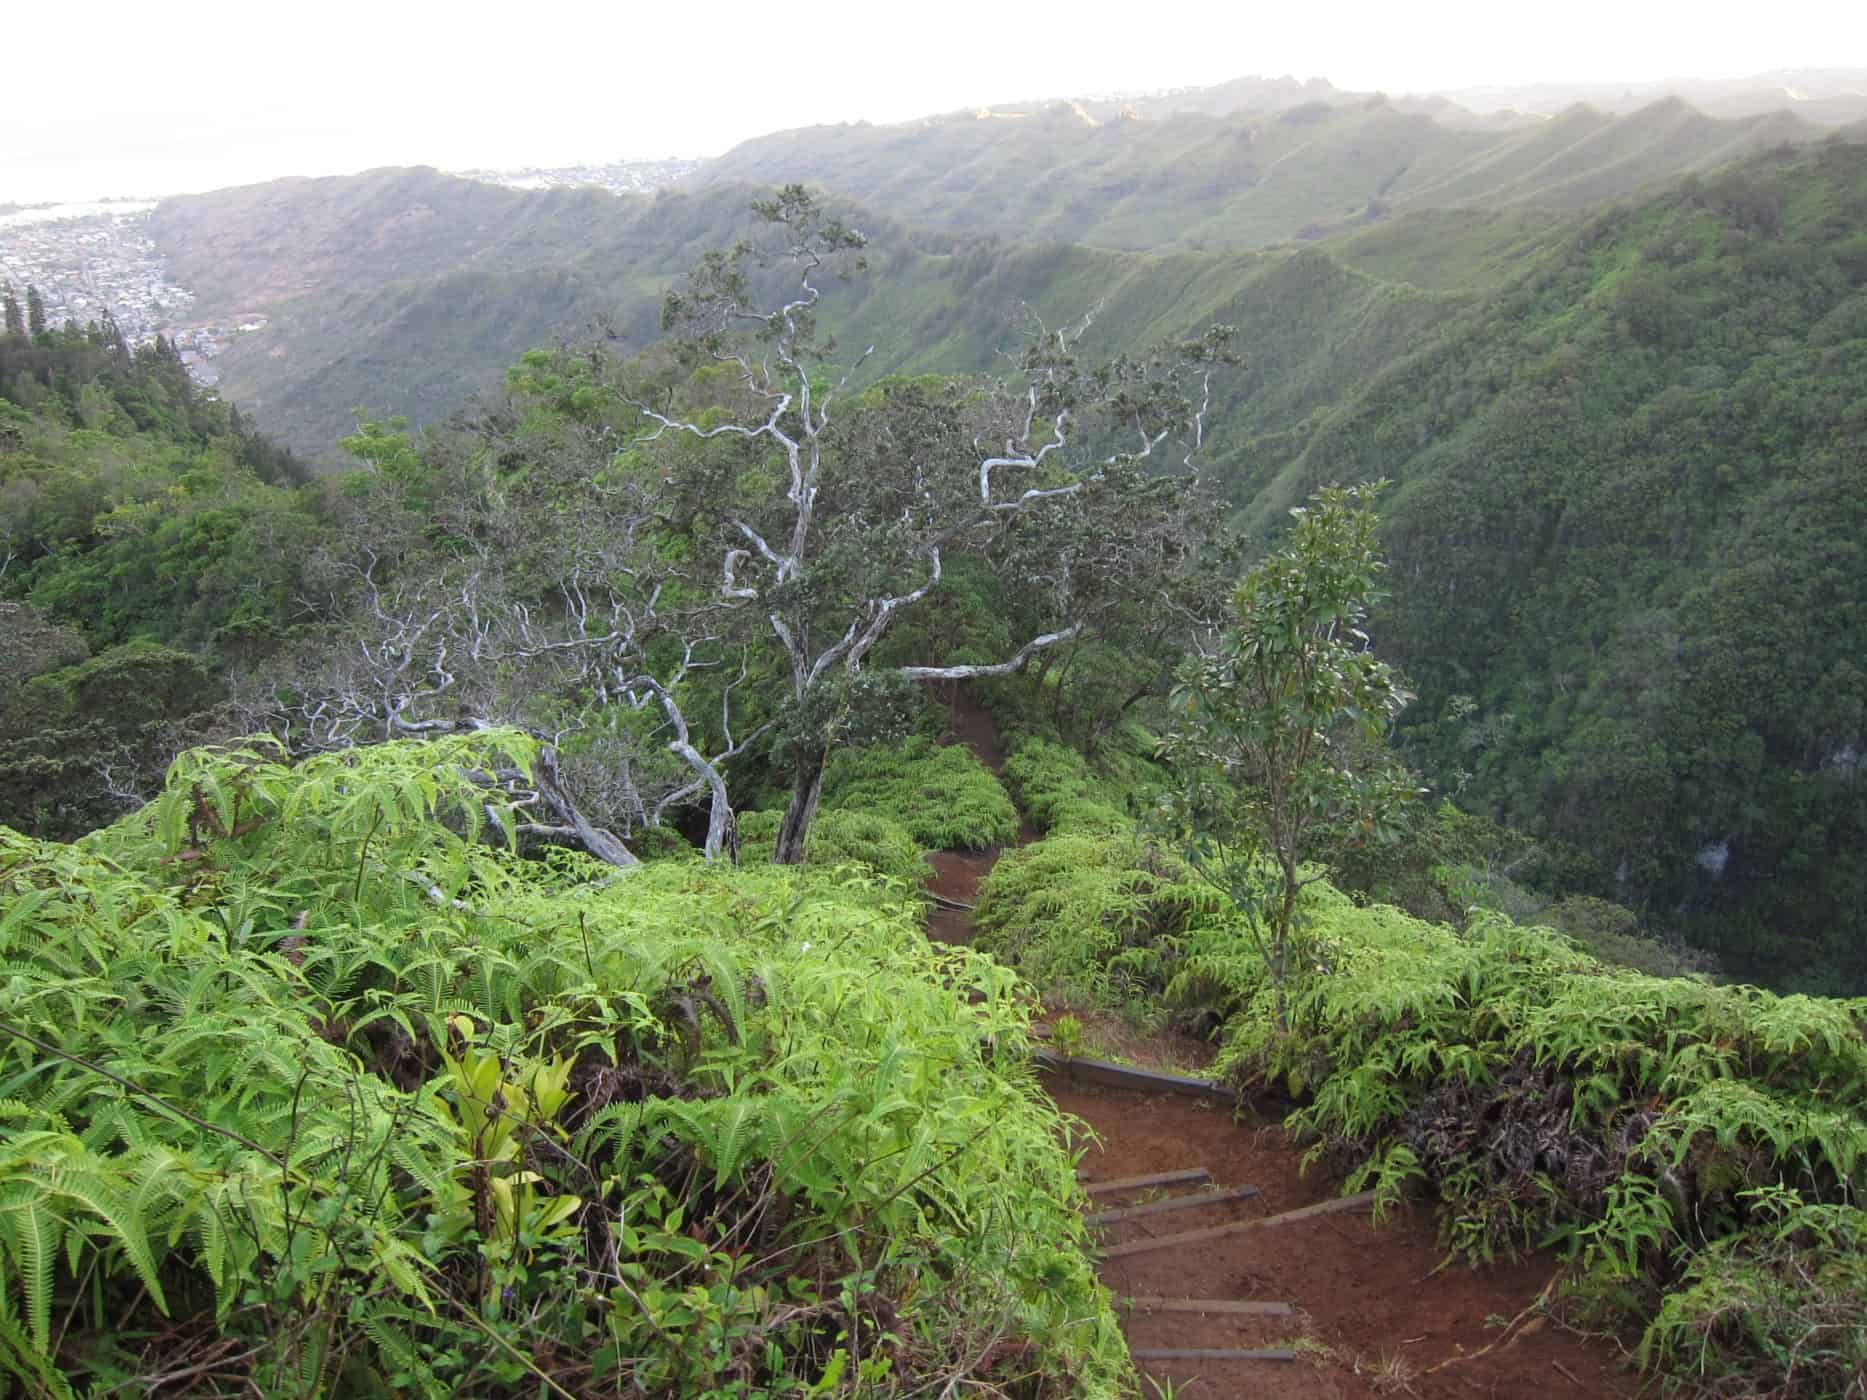 Ultimate guide to visiting Oahu - kuliouou ridge trail hike in hawaii